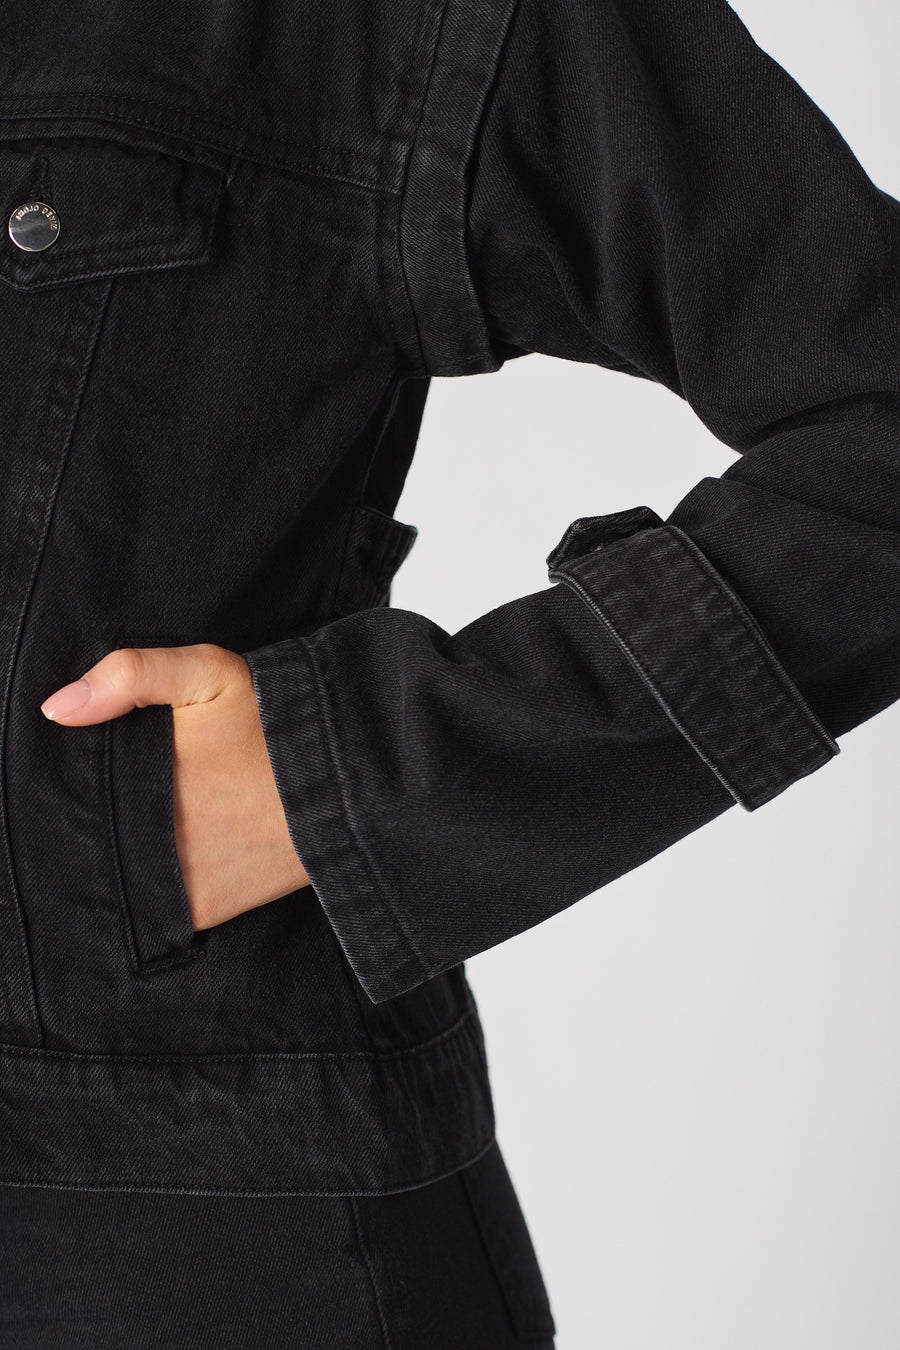 Transeasonal Tapered Removable sleeves Denim Jacket - Black Wash